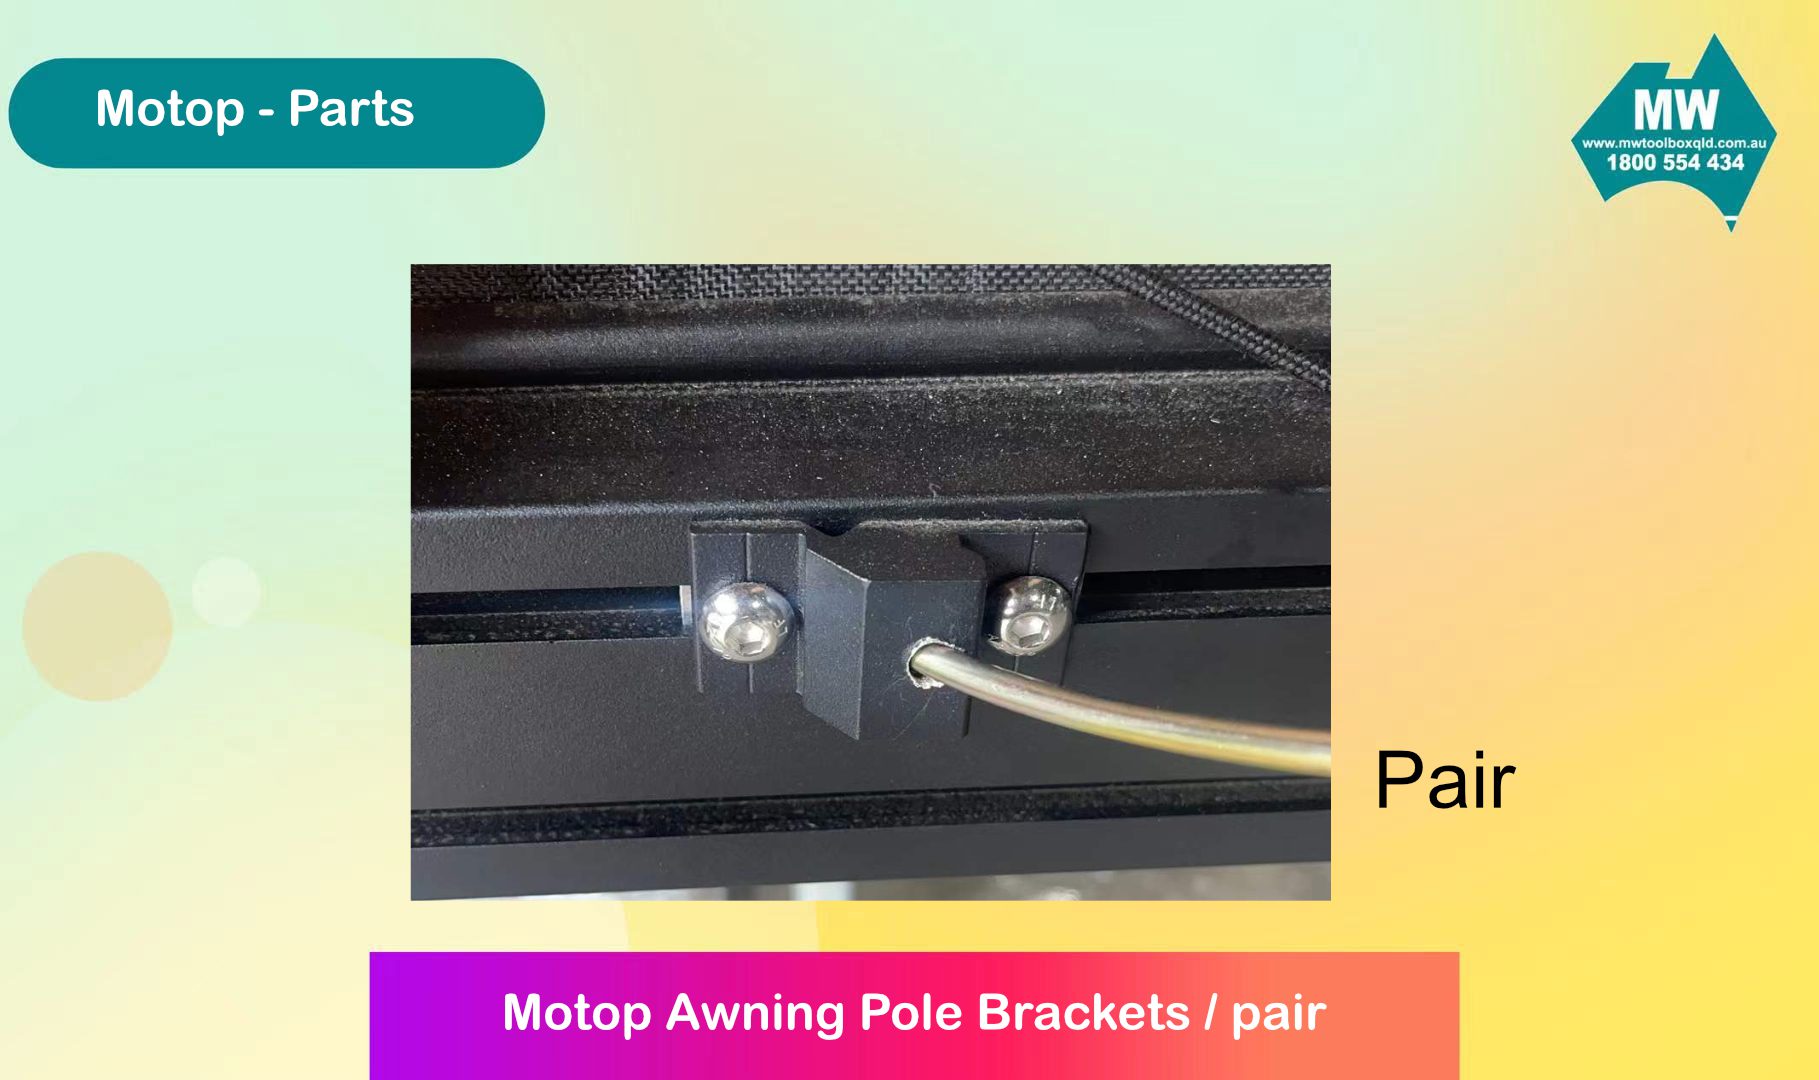 Motop awning pole brackets